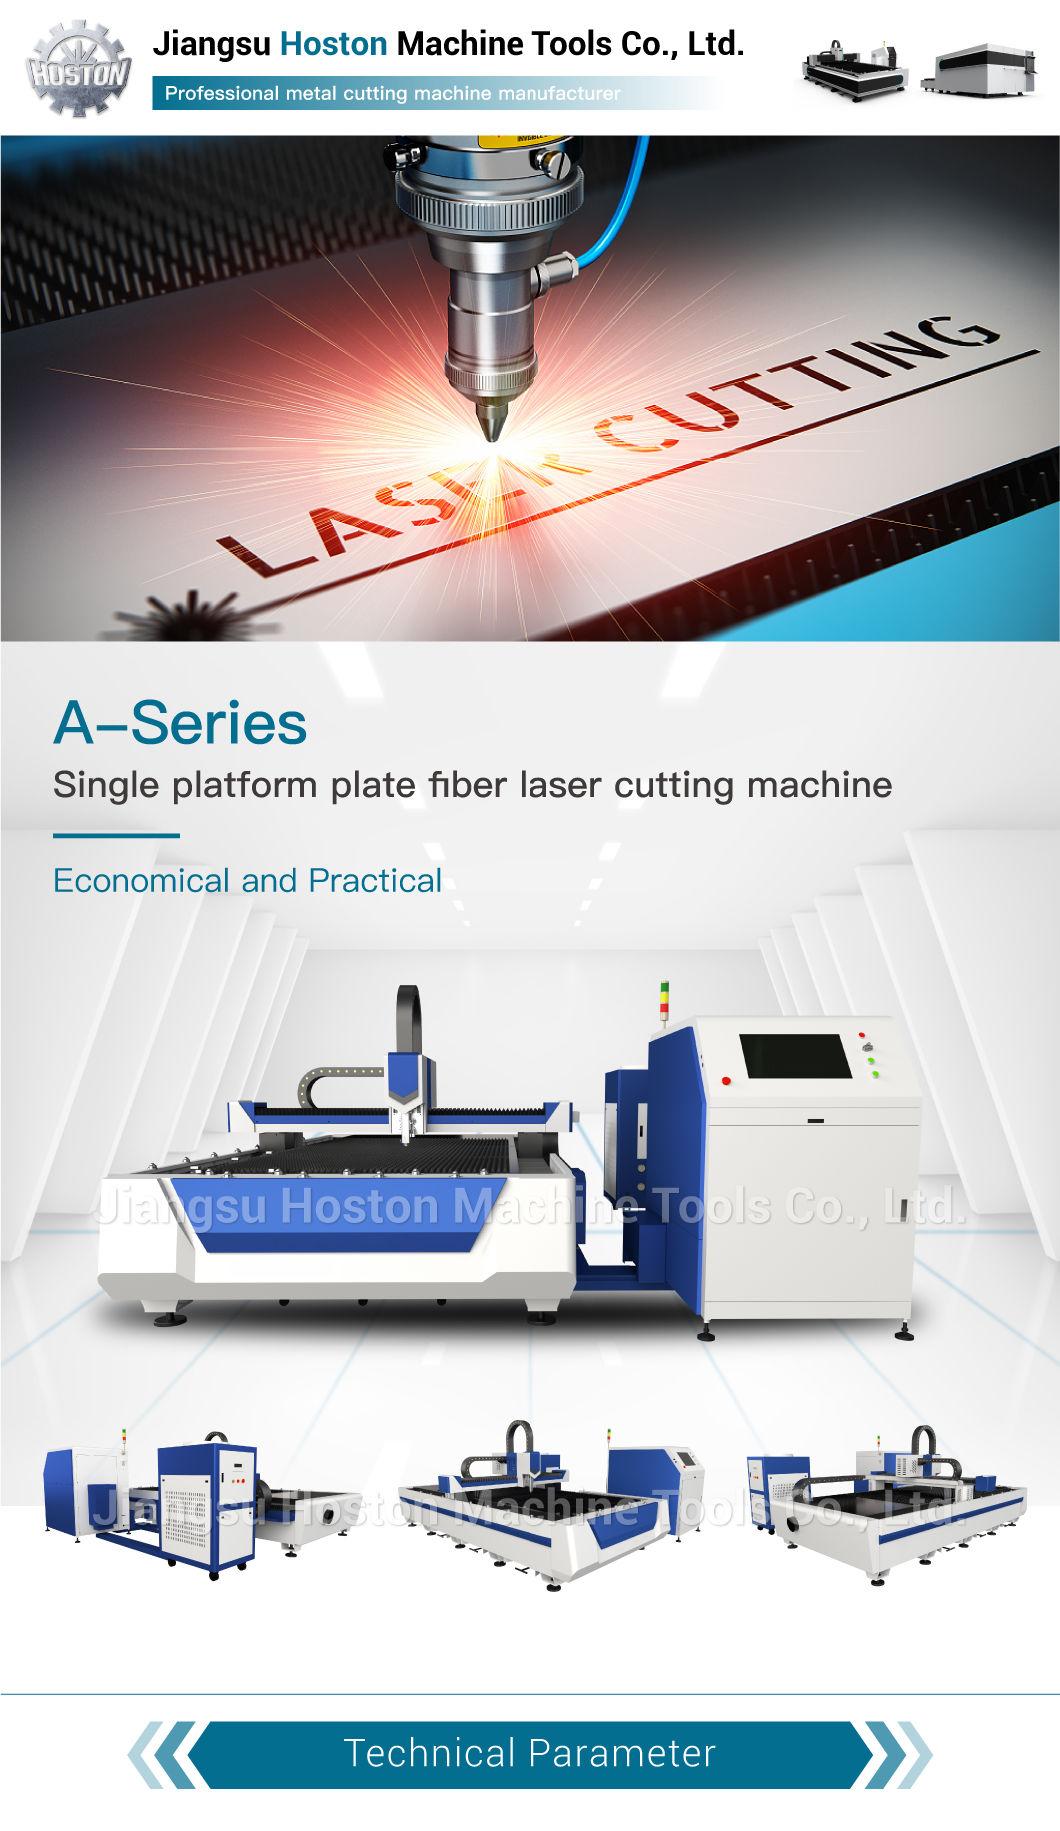 Panasonic Servo Motor CNC Plasma Cutter Laser Cutting Machine for Metal Fabrication